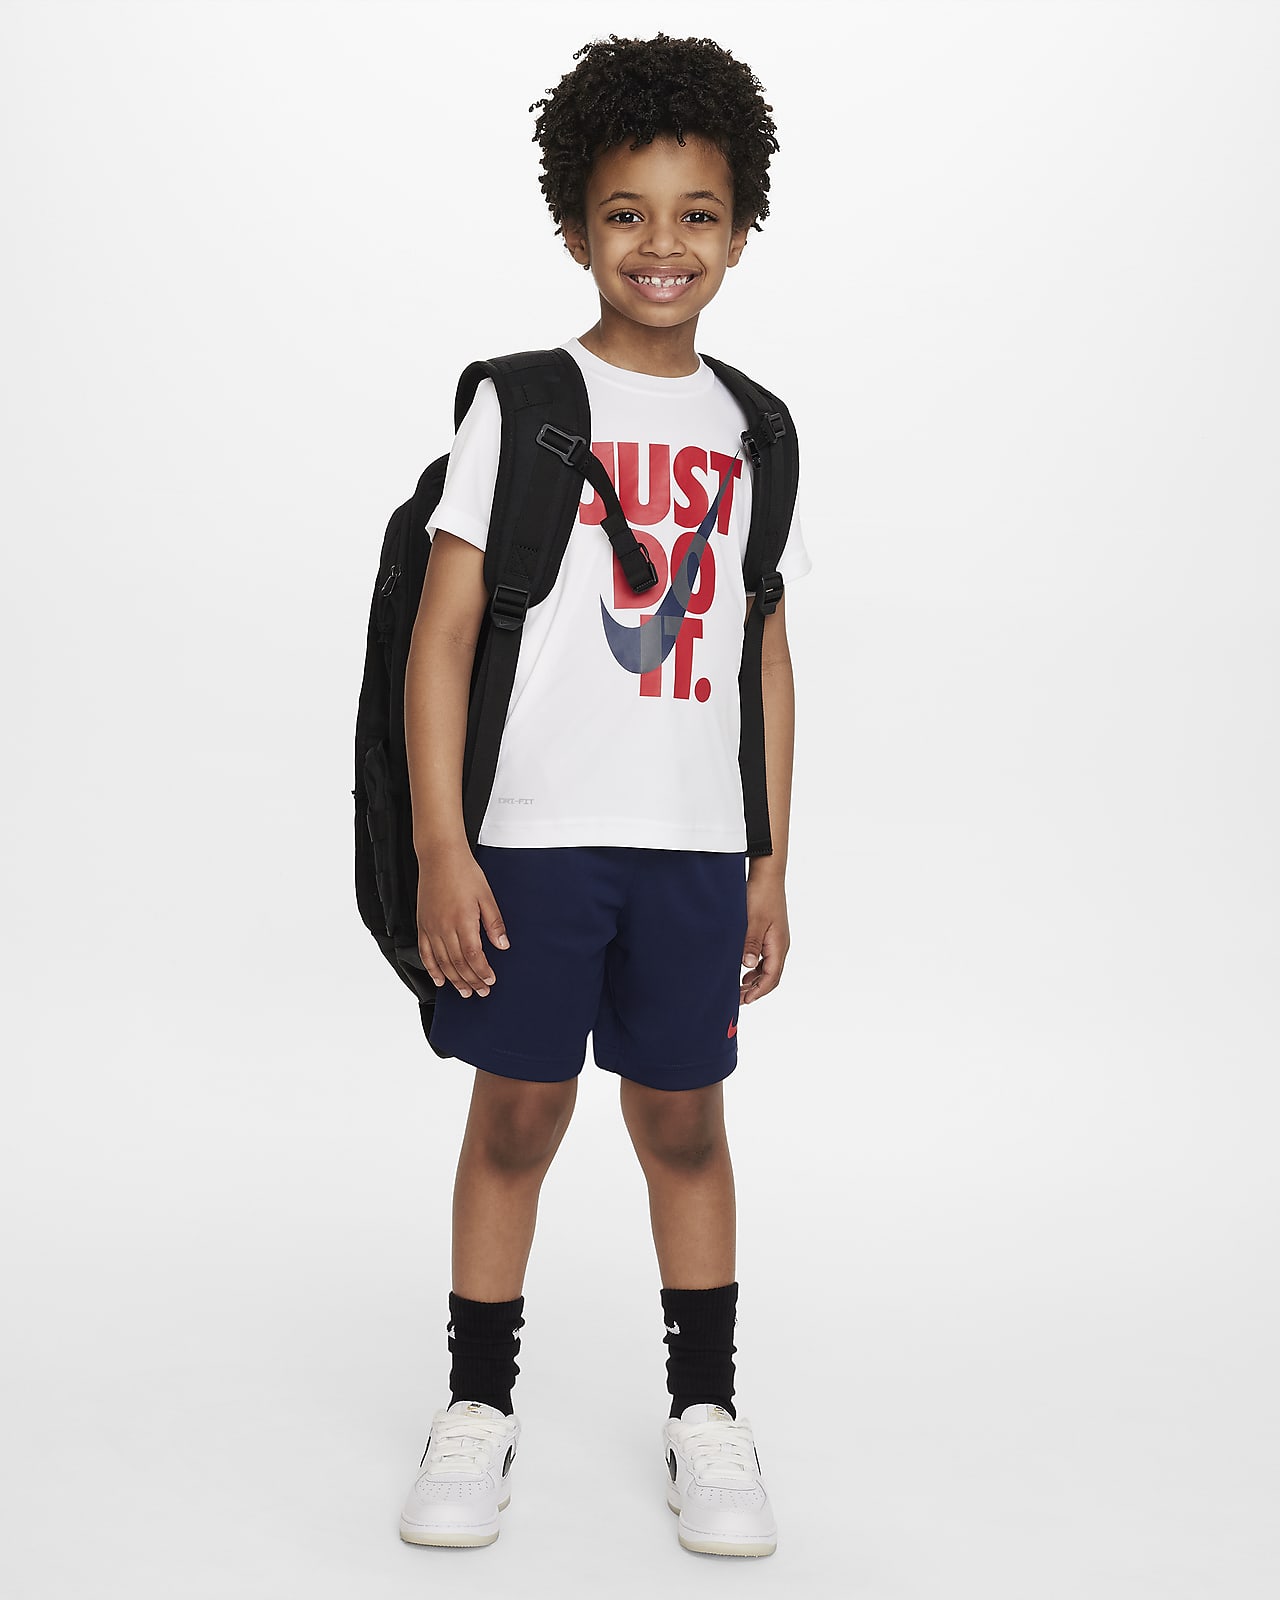 Nike Just Do It Little Kids' "Just Do It" Dri-FIT Shorts Set